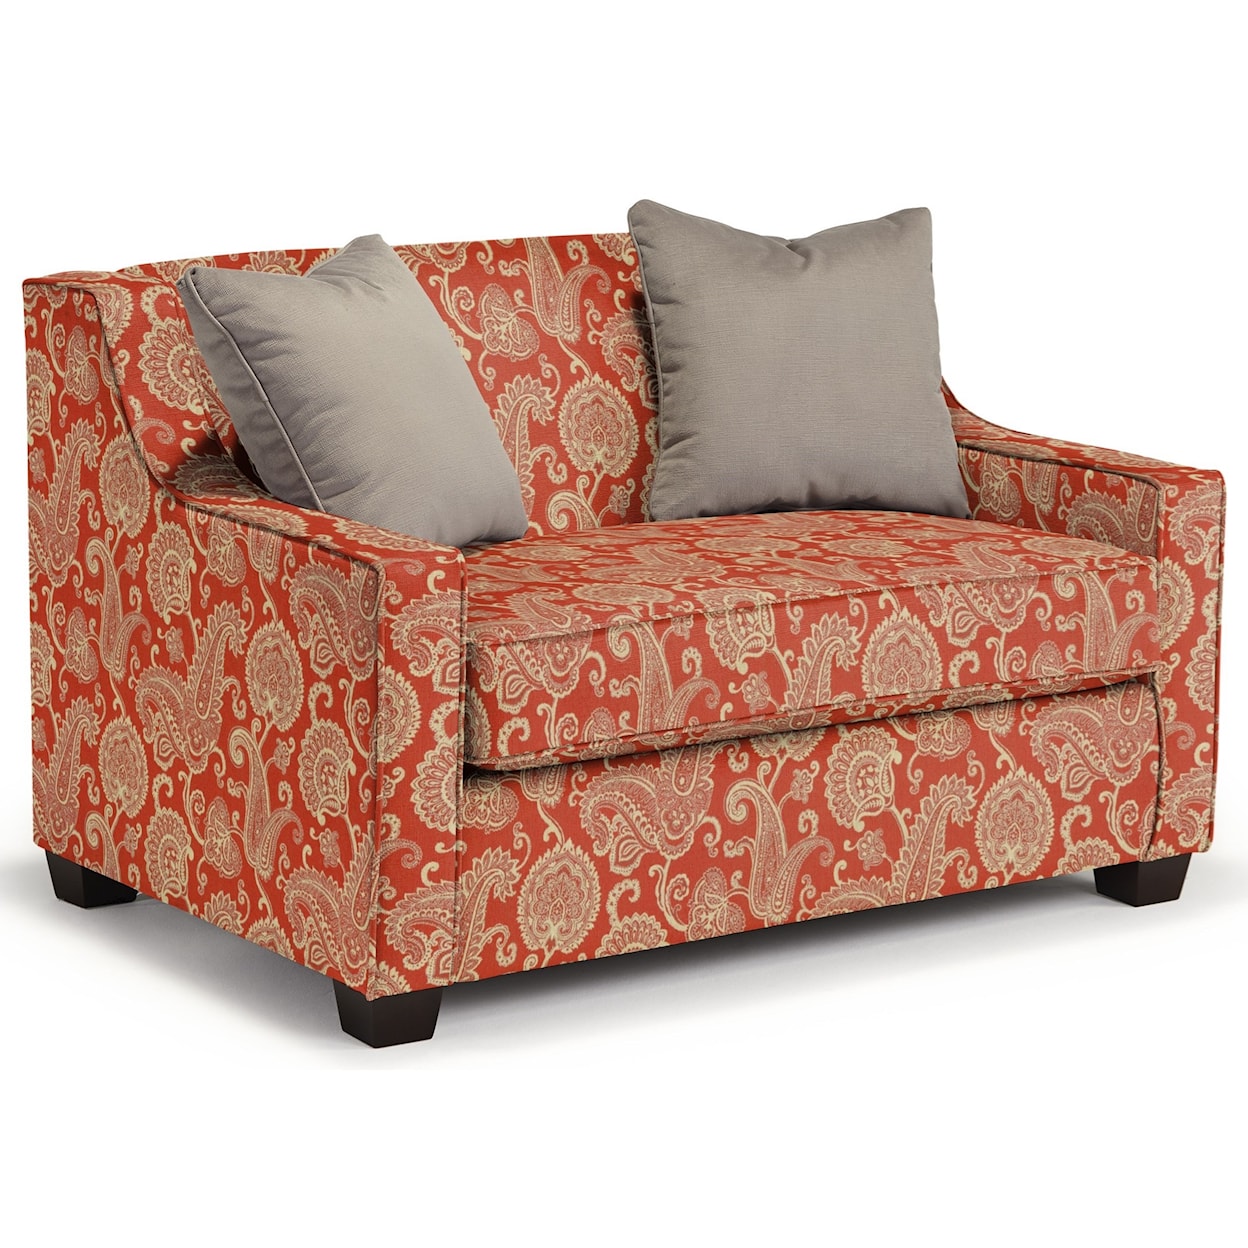 Best Home Furnishings Marinette Twin Air Dream Sleeper Chair